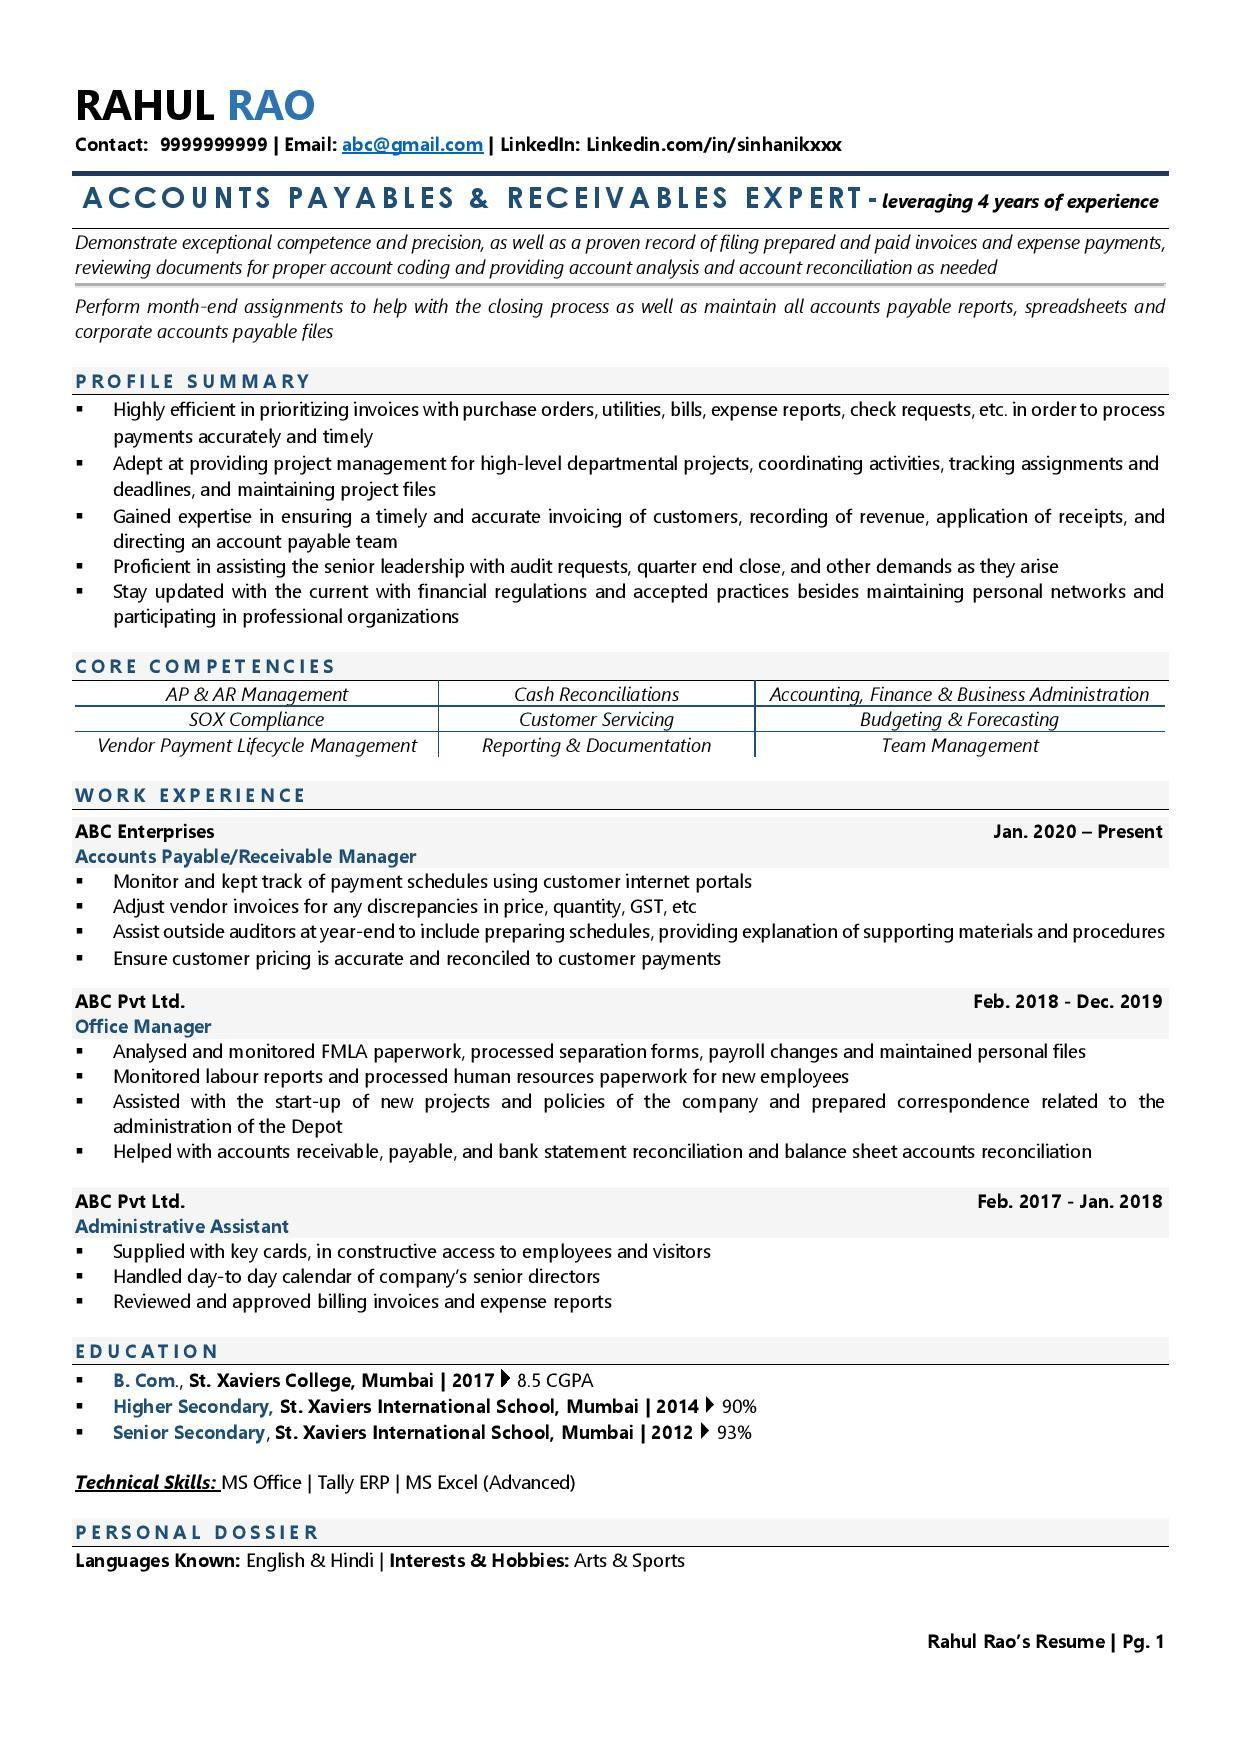 Sample Resume for Accounts Payable Executive Accounts Payable & Receivable Resume Examples & Template (with Job …